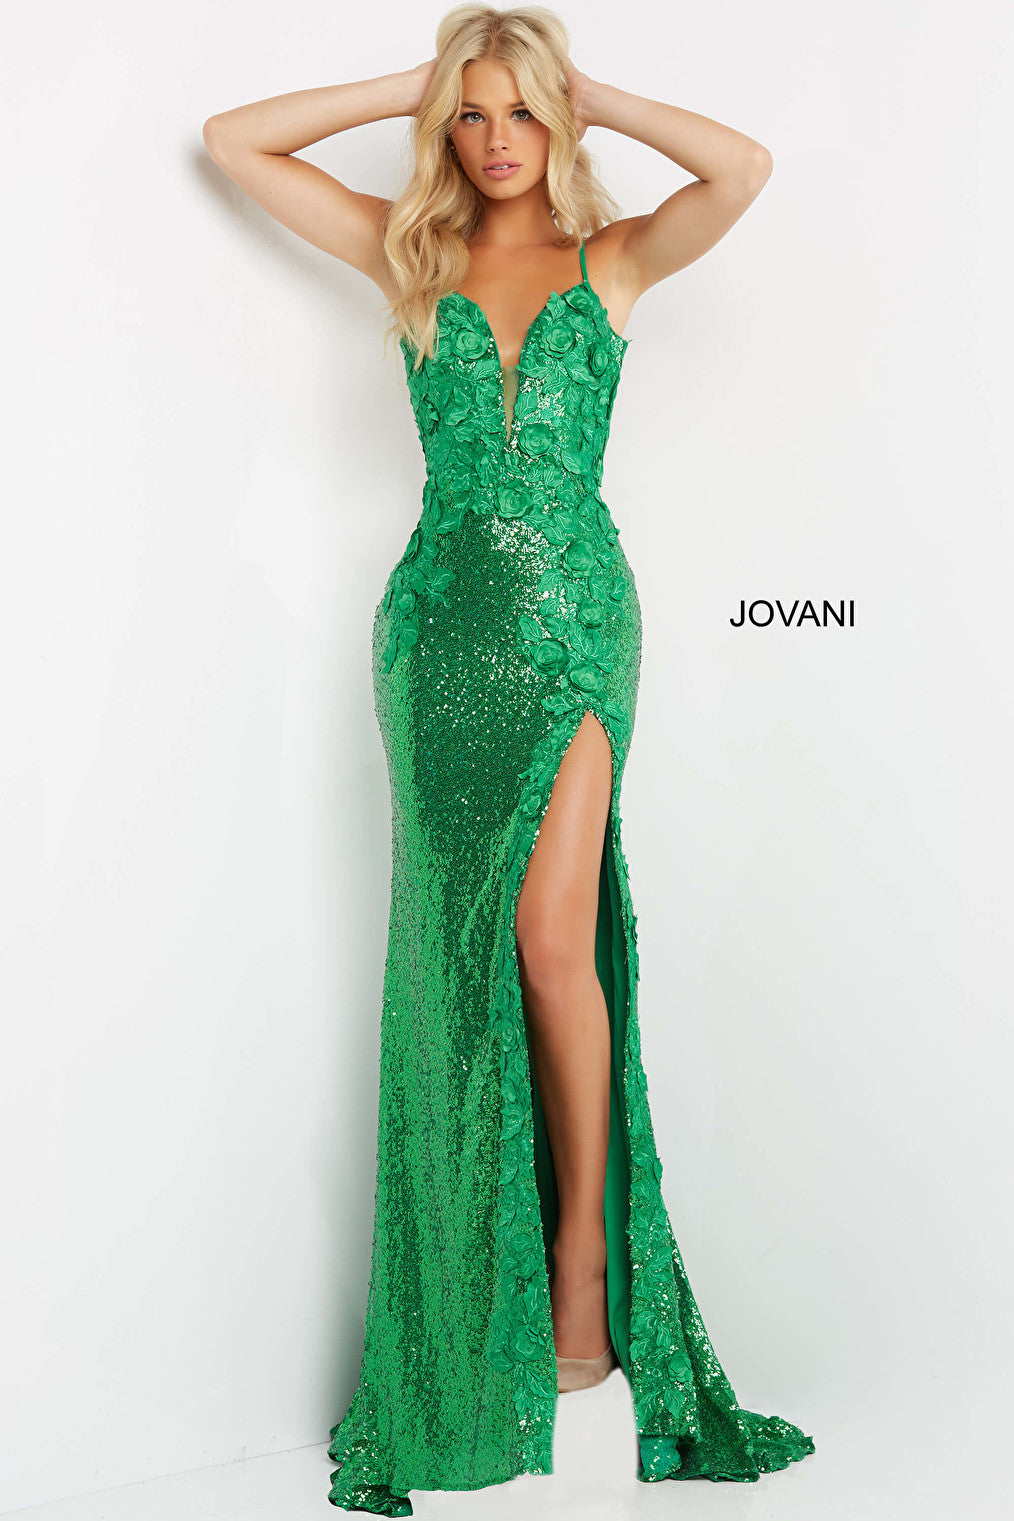 Jovani 1012 embellished prom dress